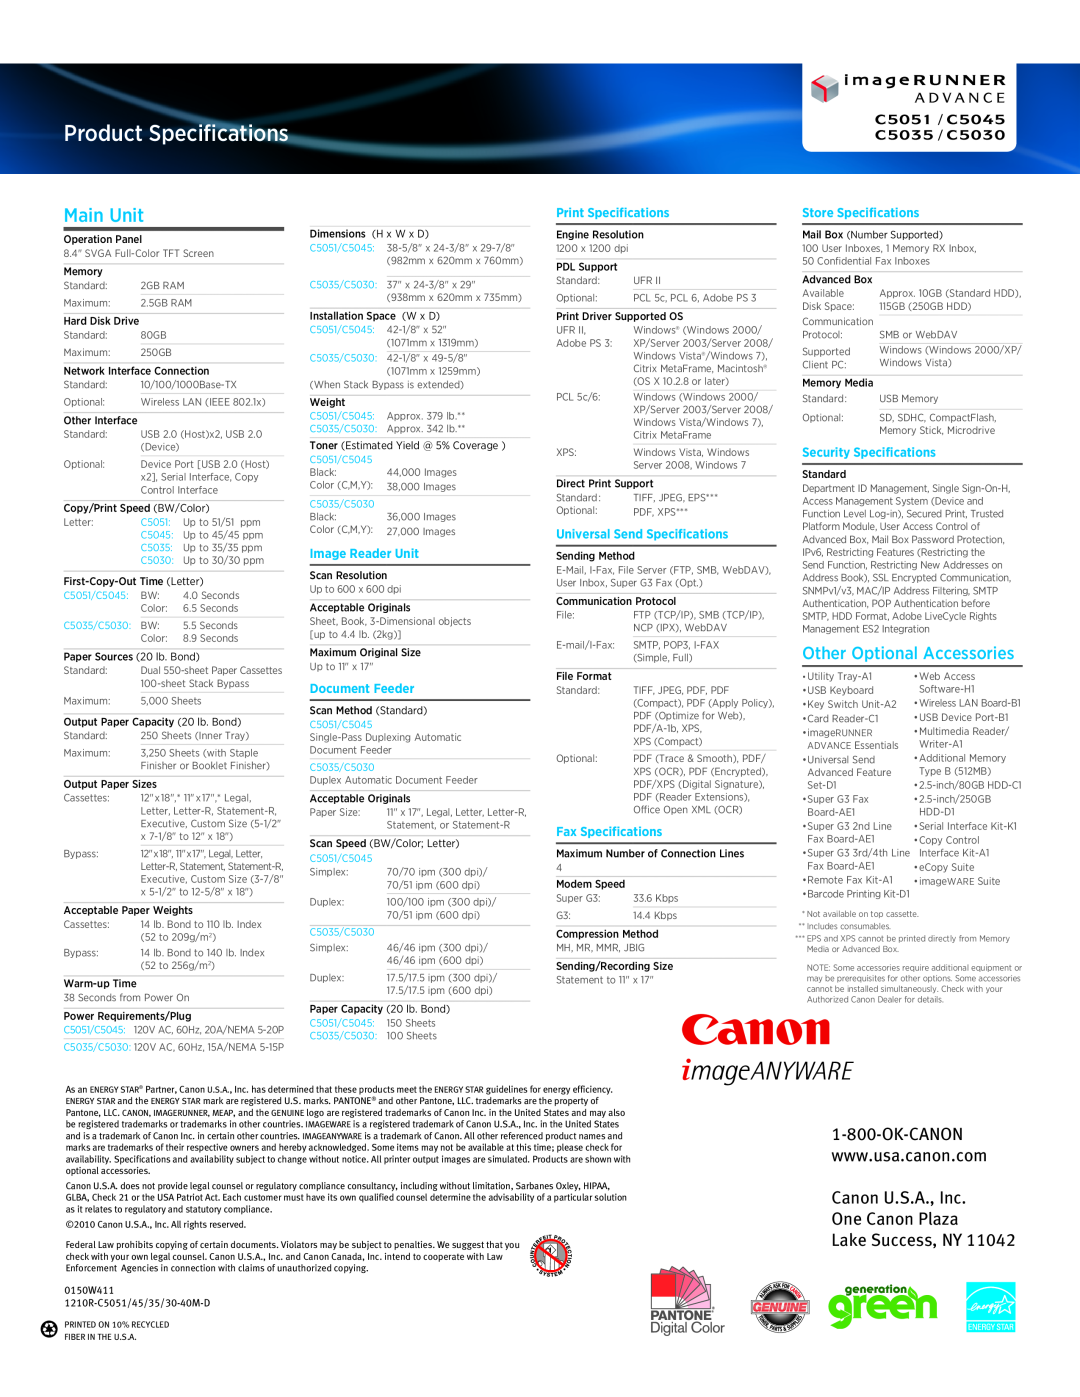 Canon C5045 manual Main Unit, Canon U.S.A., Inc One Canon Plaza Lake Success, NY, Product Specifications, Image Reader Unit 